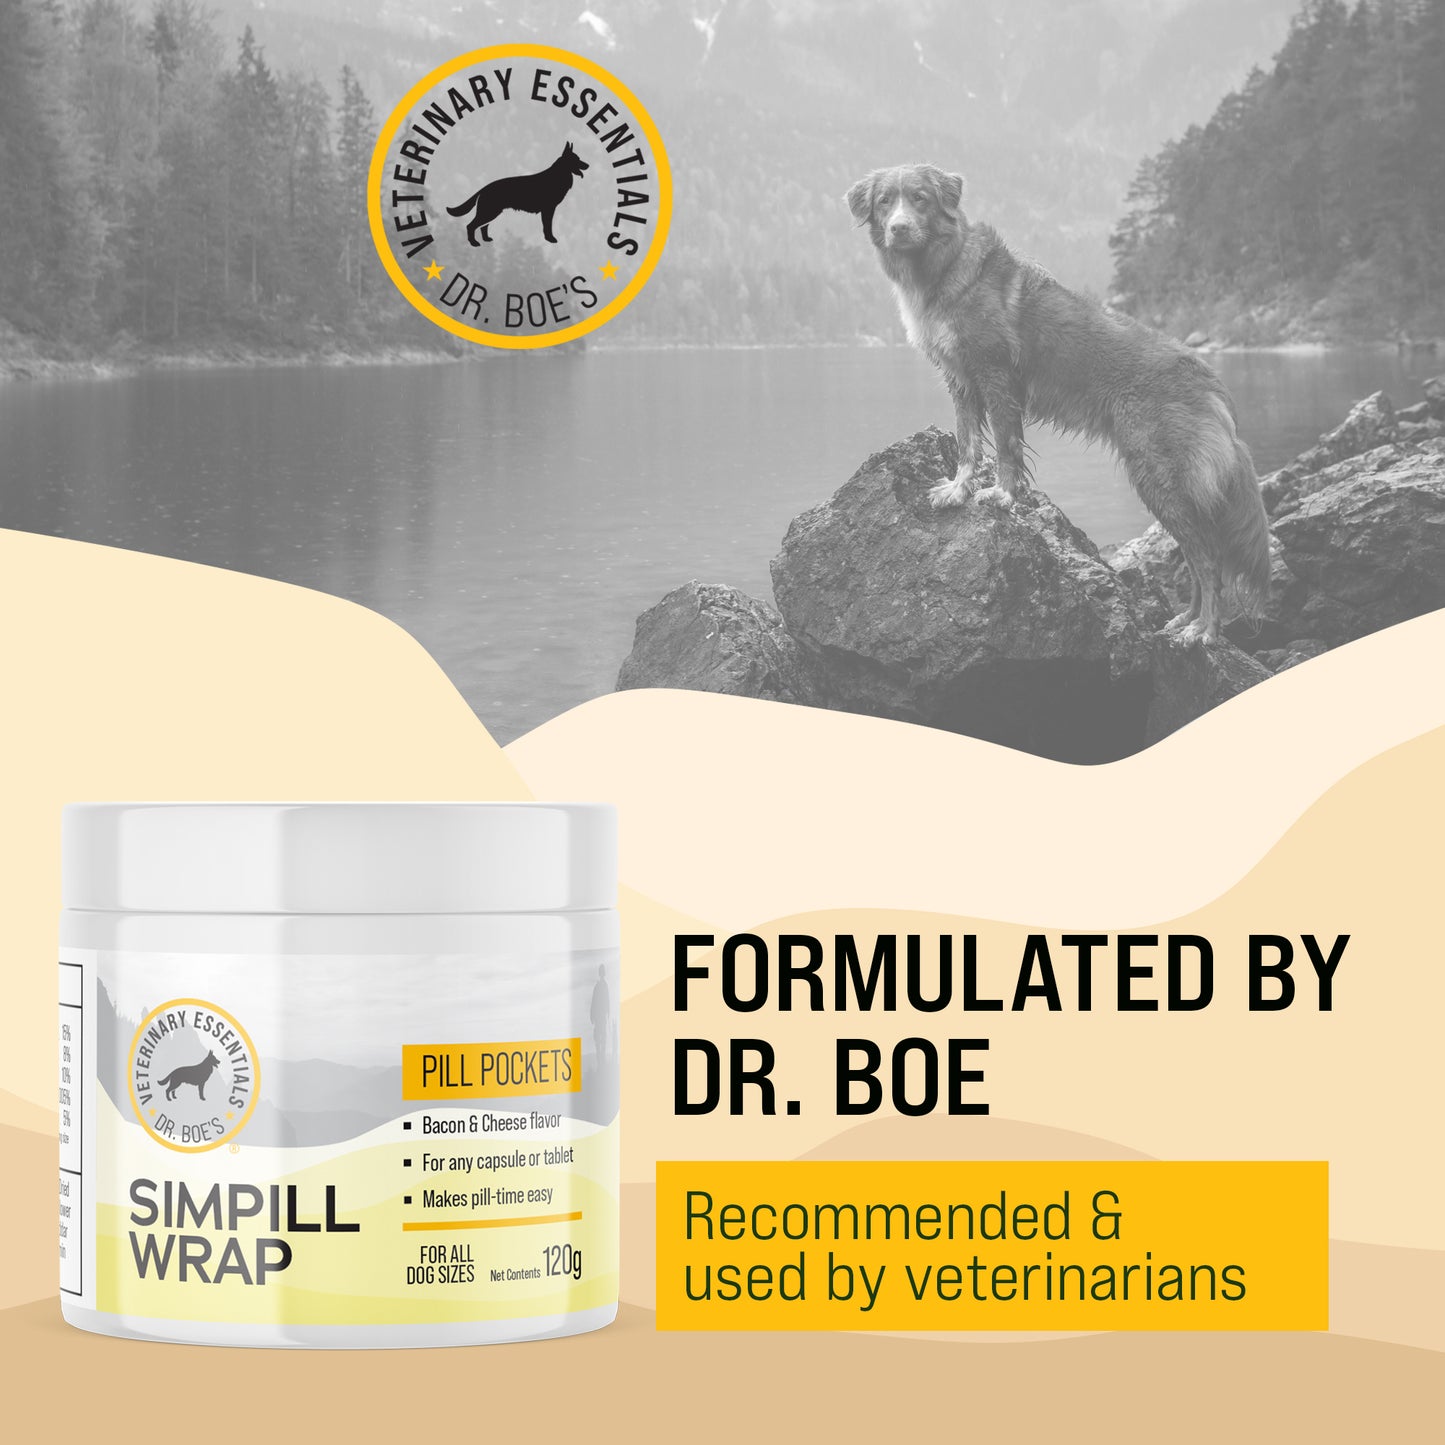 Dr. Boe's Veterinary Essentials SimPill Wrap